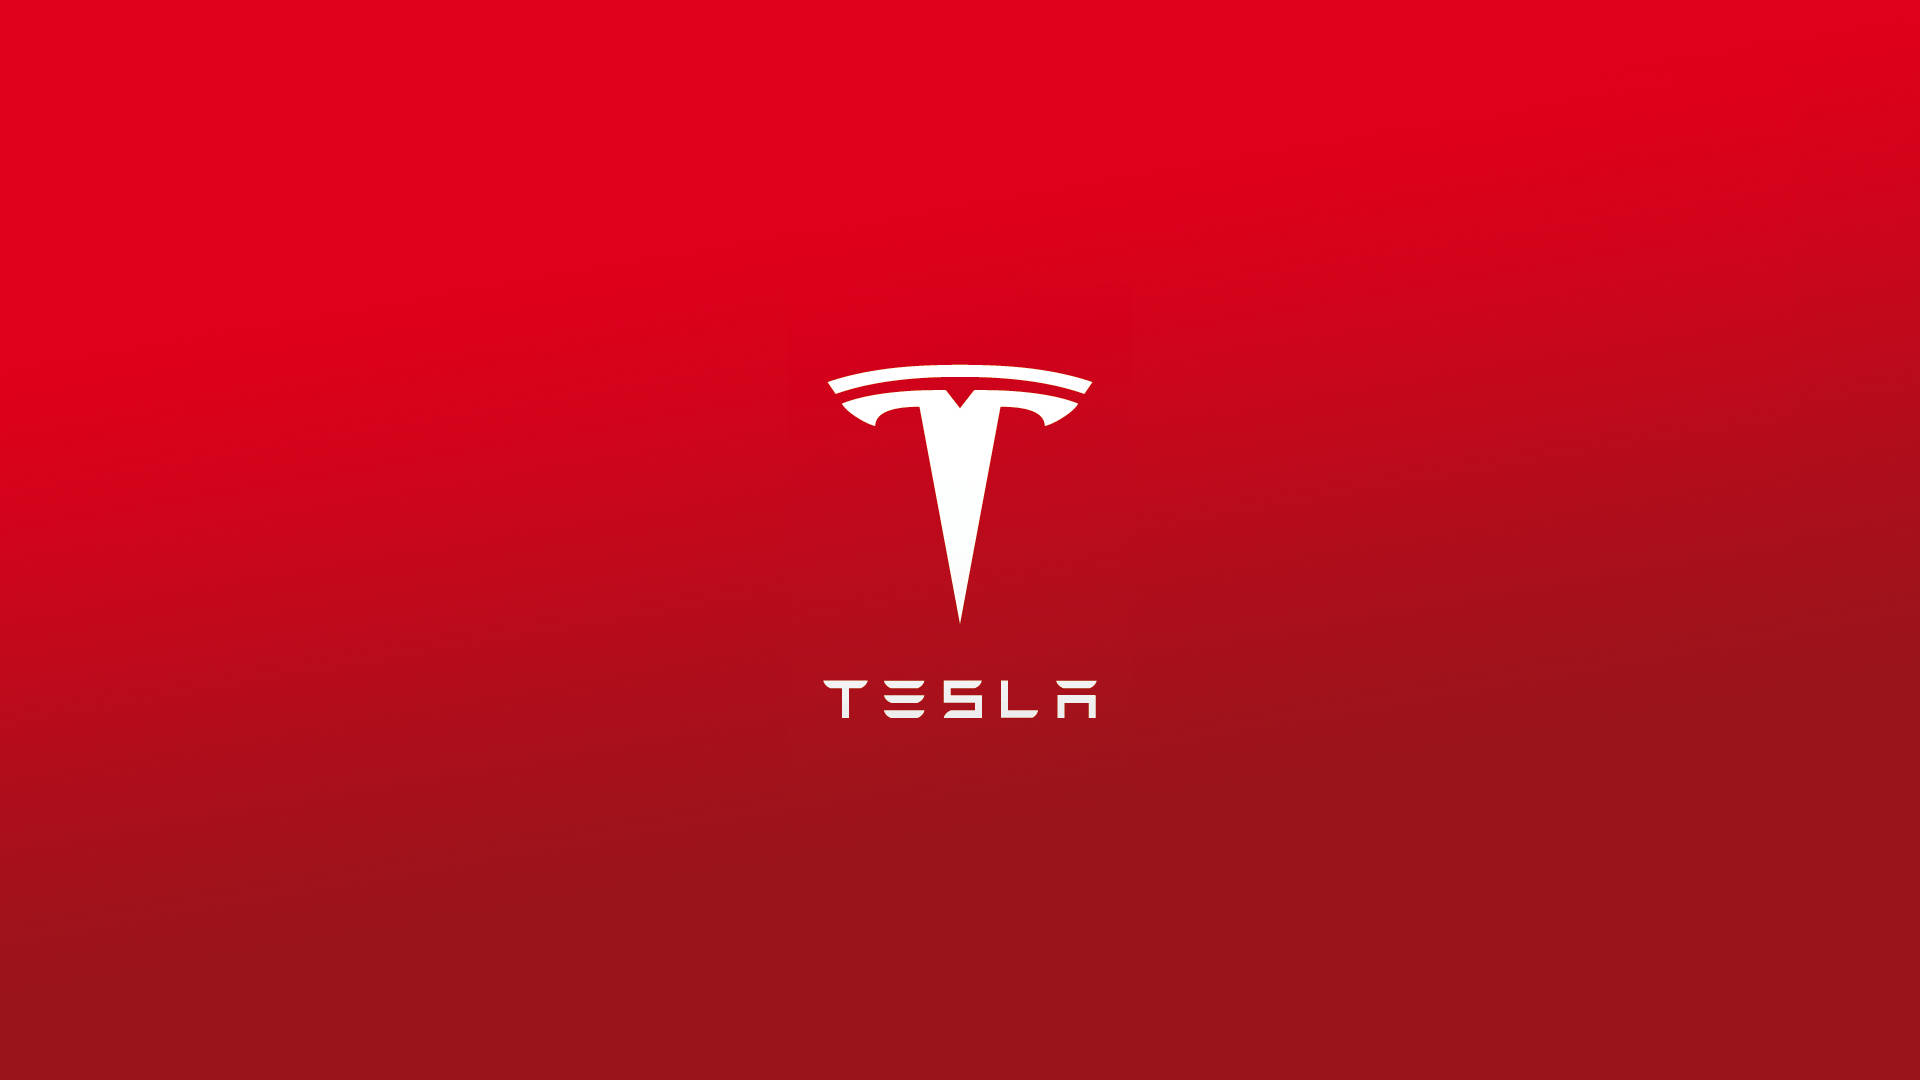 Tesla Full HD Red Wallpaper